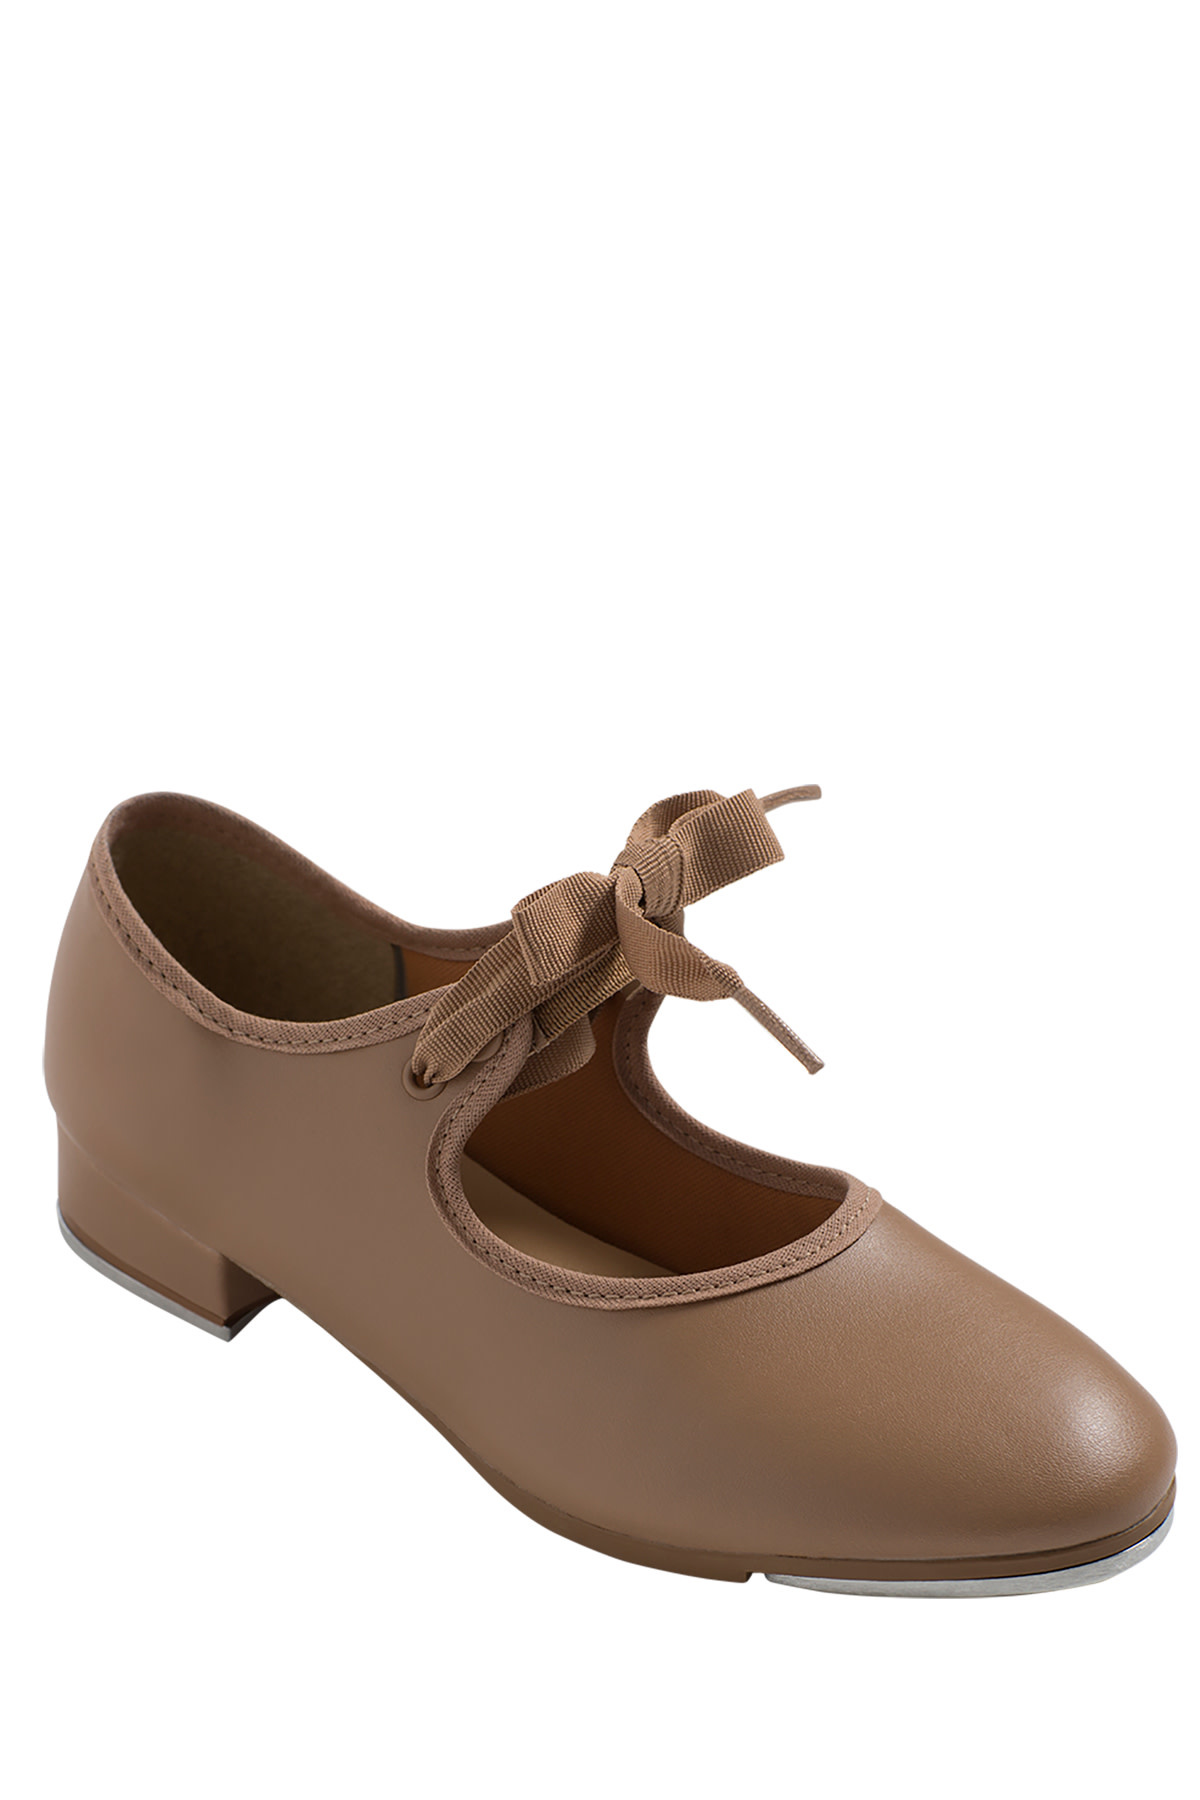 So Danca Classic Tye Tap Shoe So Danca TA-35, Patent Leather Upper